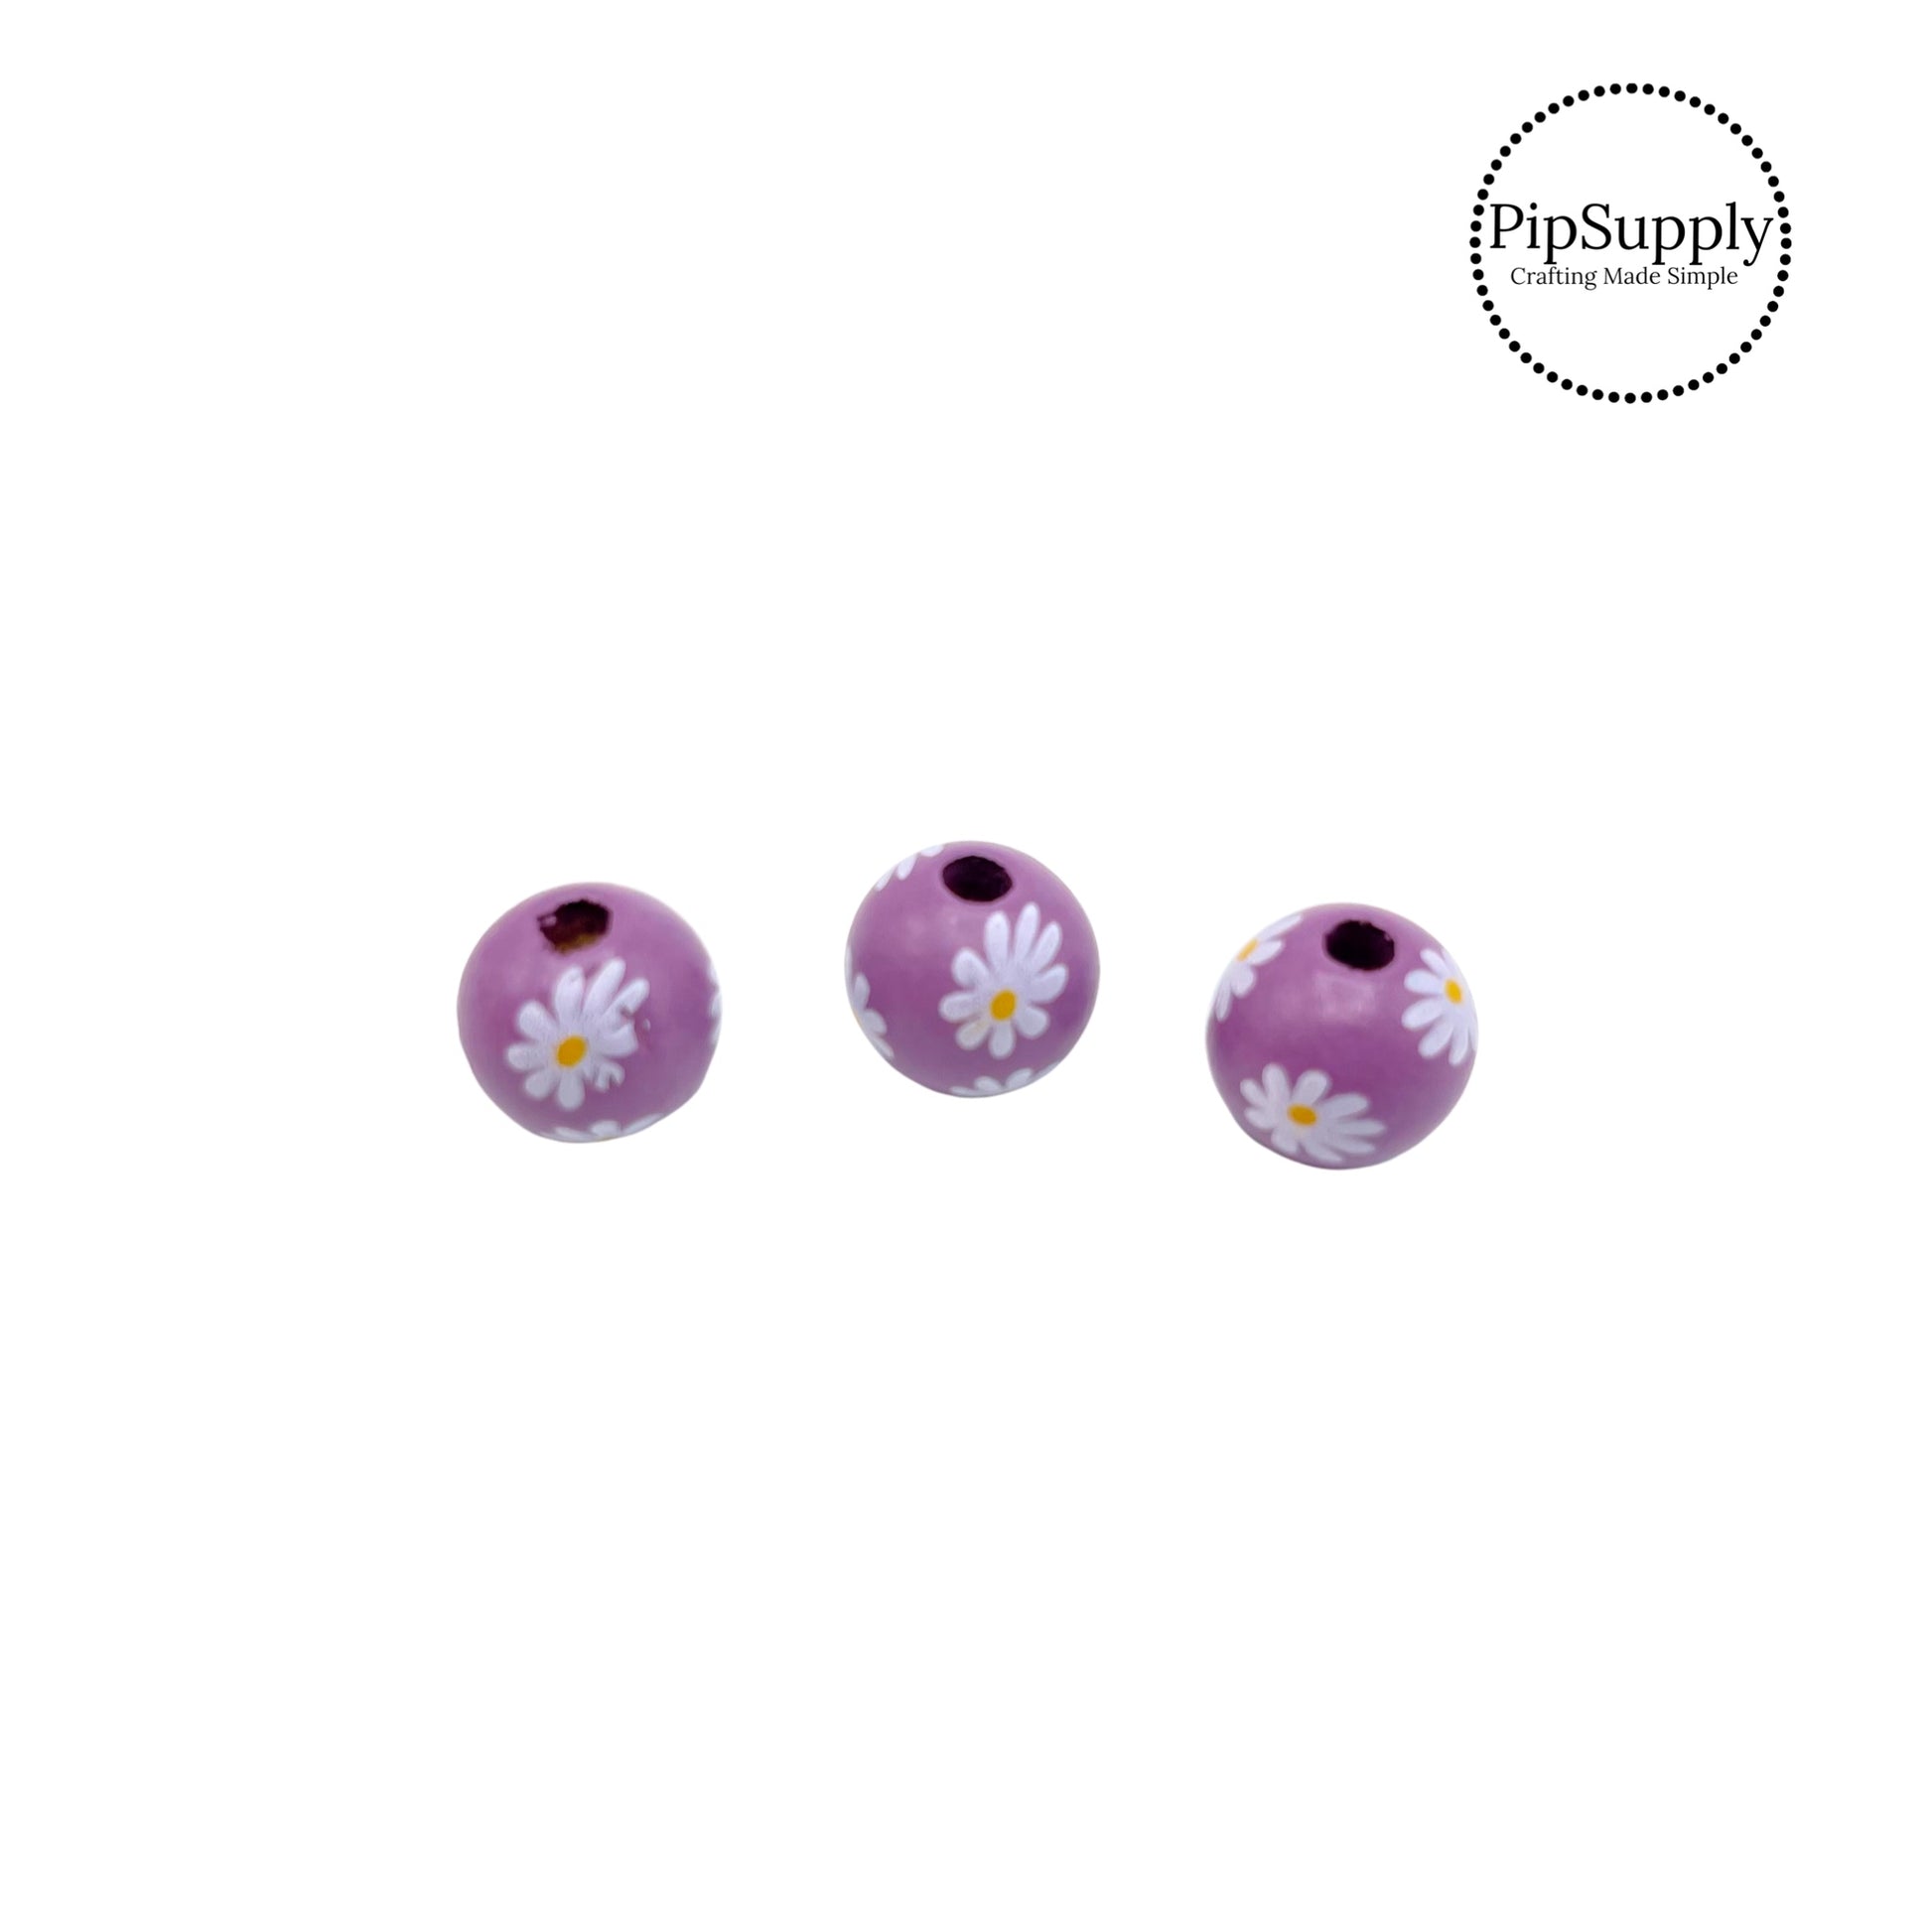 White flowers on purple flower bead embellishment